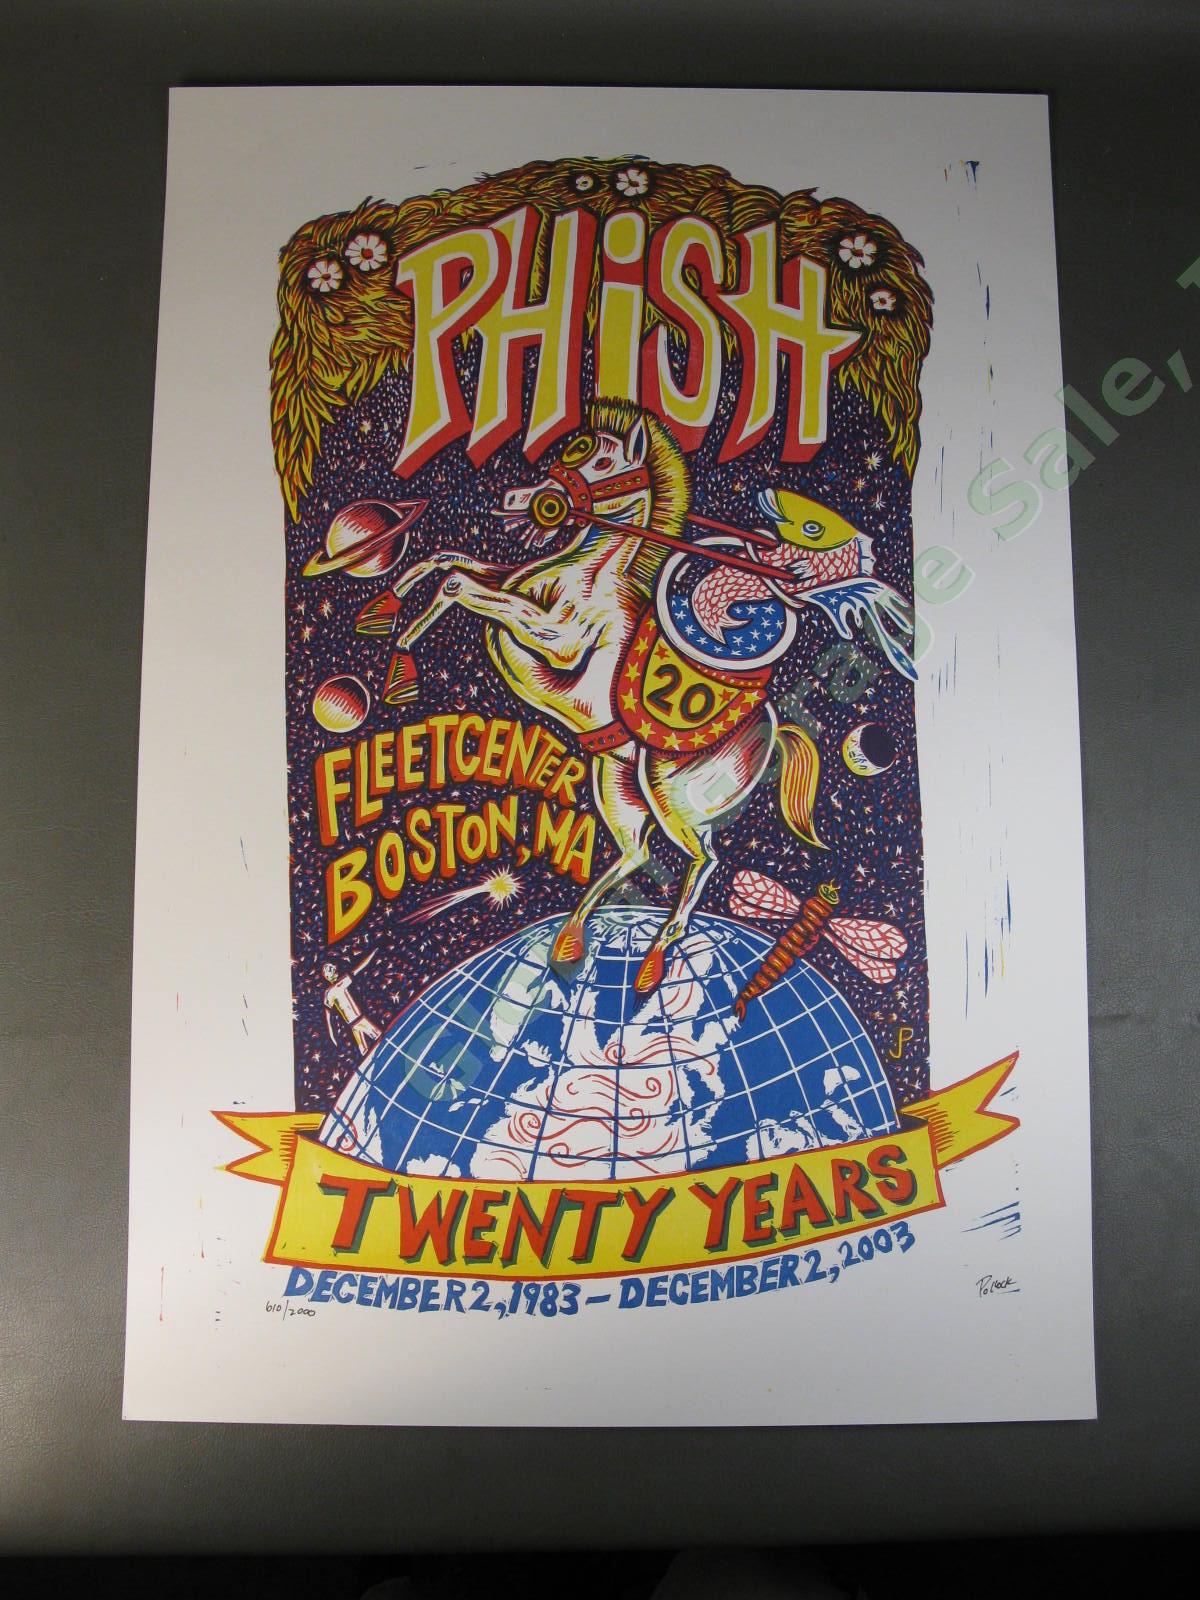 Phish Fleet Center Boston MA 12/2/2003 Twenty Years Jim Pollock Signed Poster NR